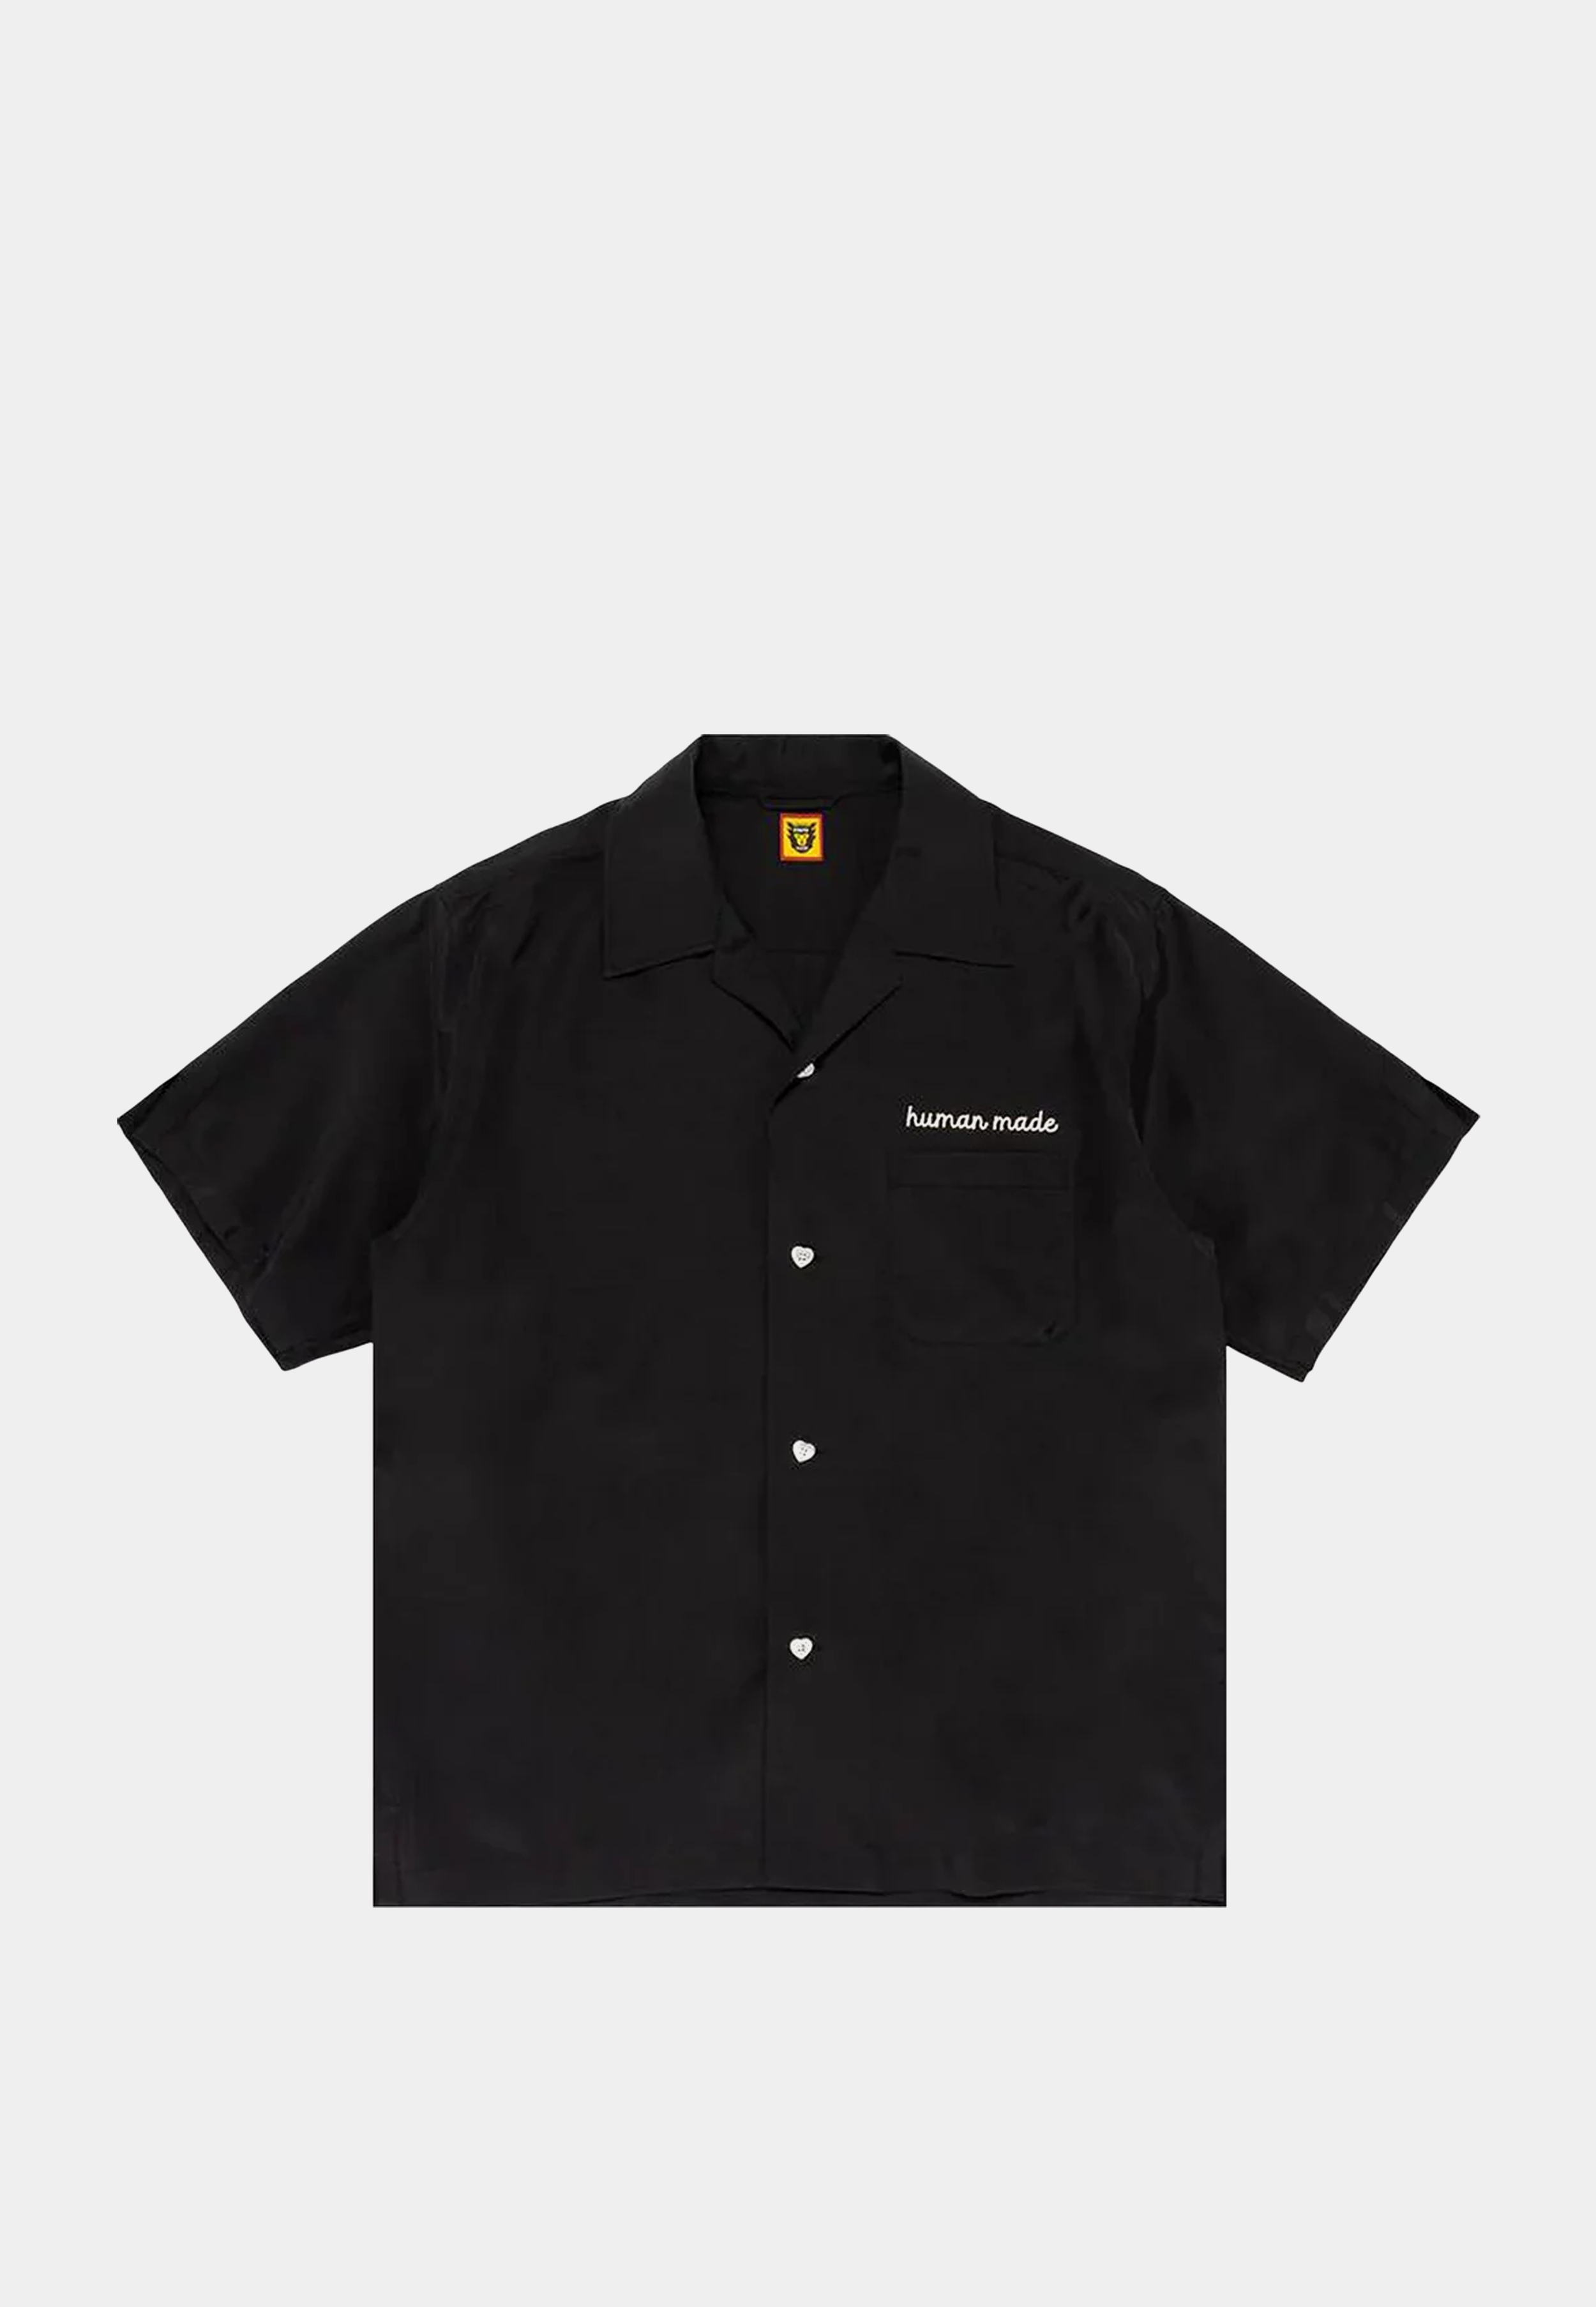 Human Made Bowling Shirt Black